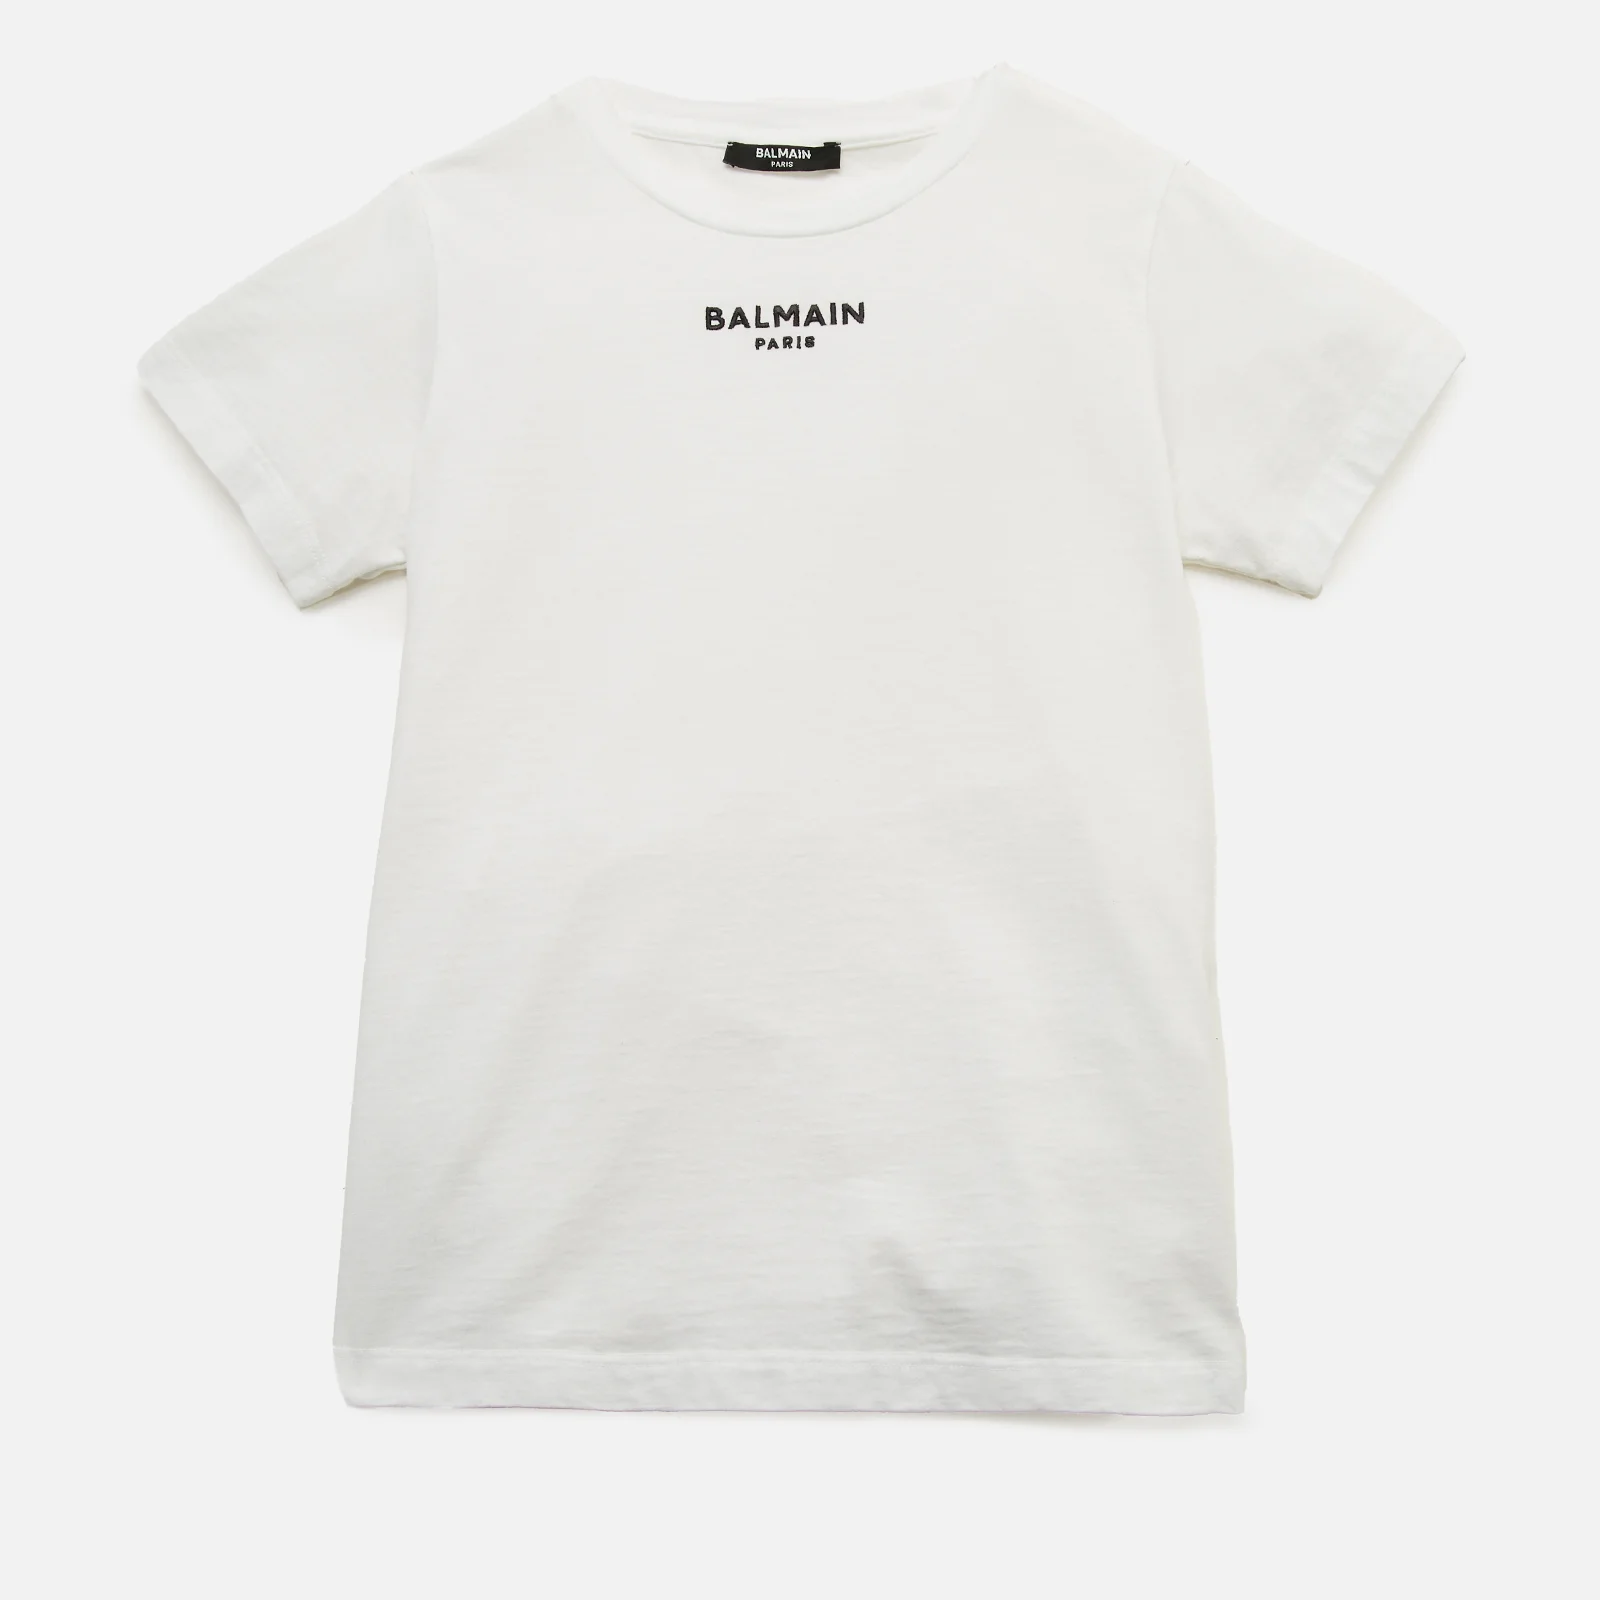 Balmain Boys' T-Shirt - Bianco/Nero Image 1